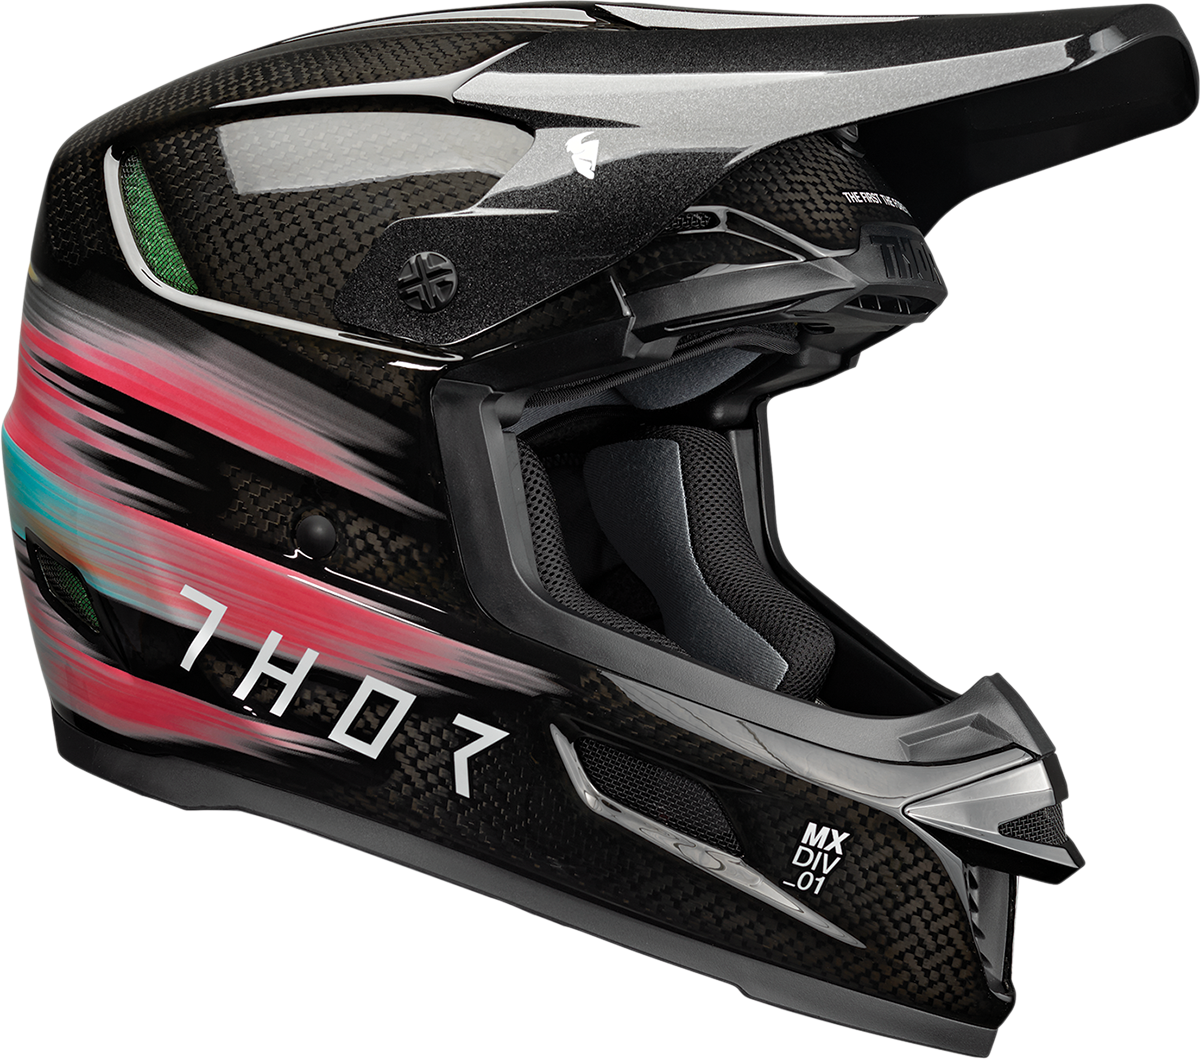 Thor Reflex Theory Unisex Adult Off-road Riding Dirt Bike Racing ATV UTV Helmet